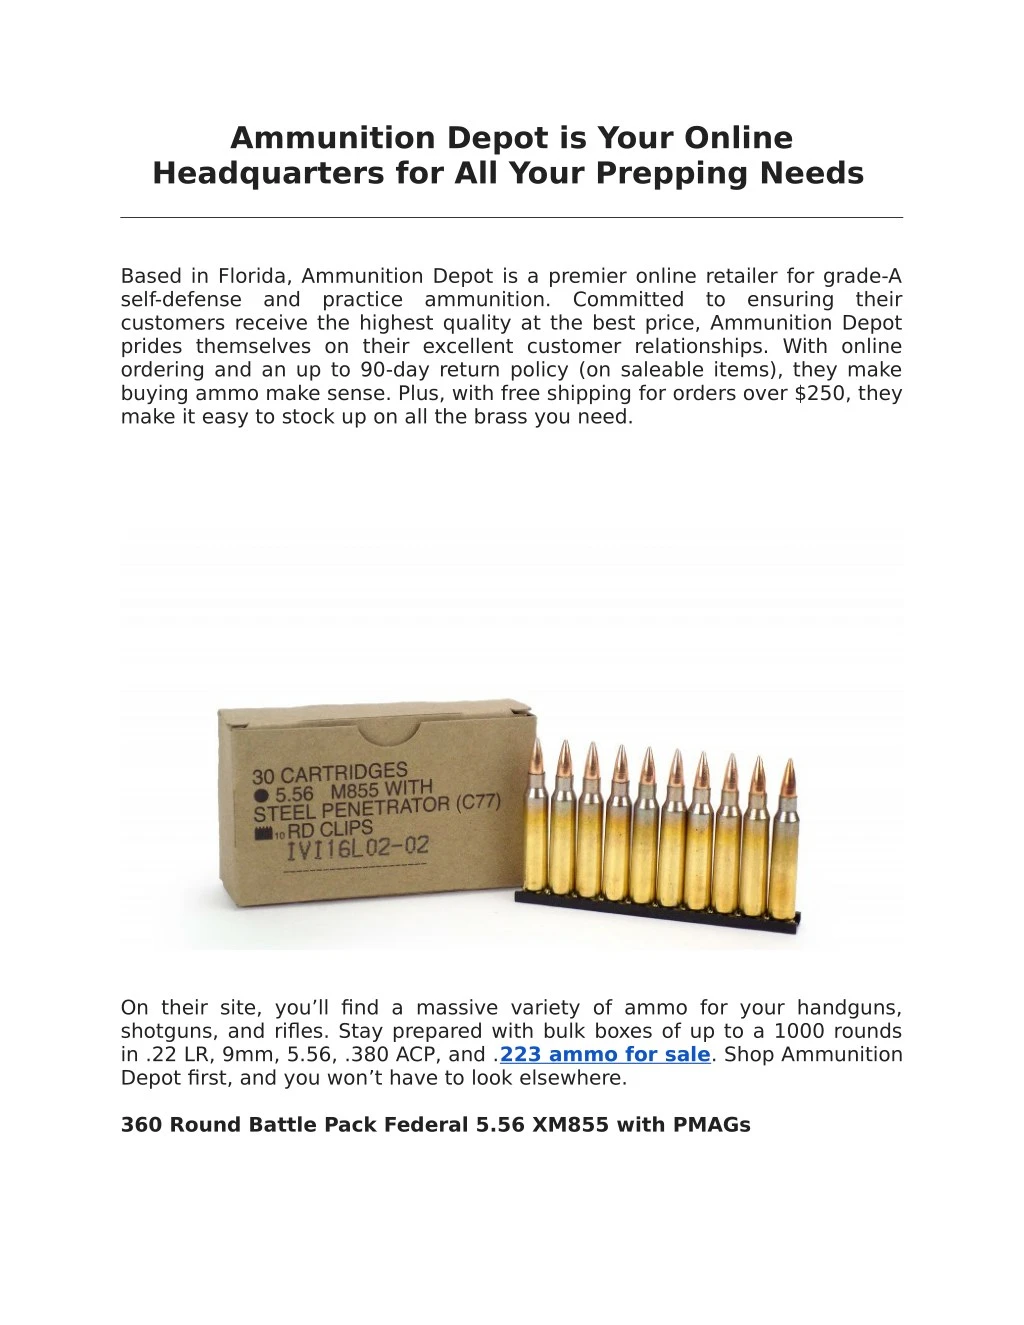 ammunition depot is your online headquarters